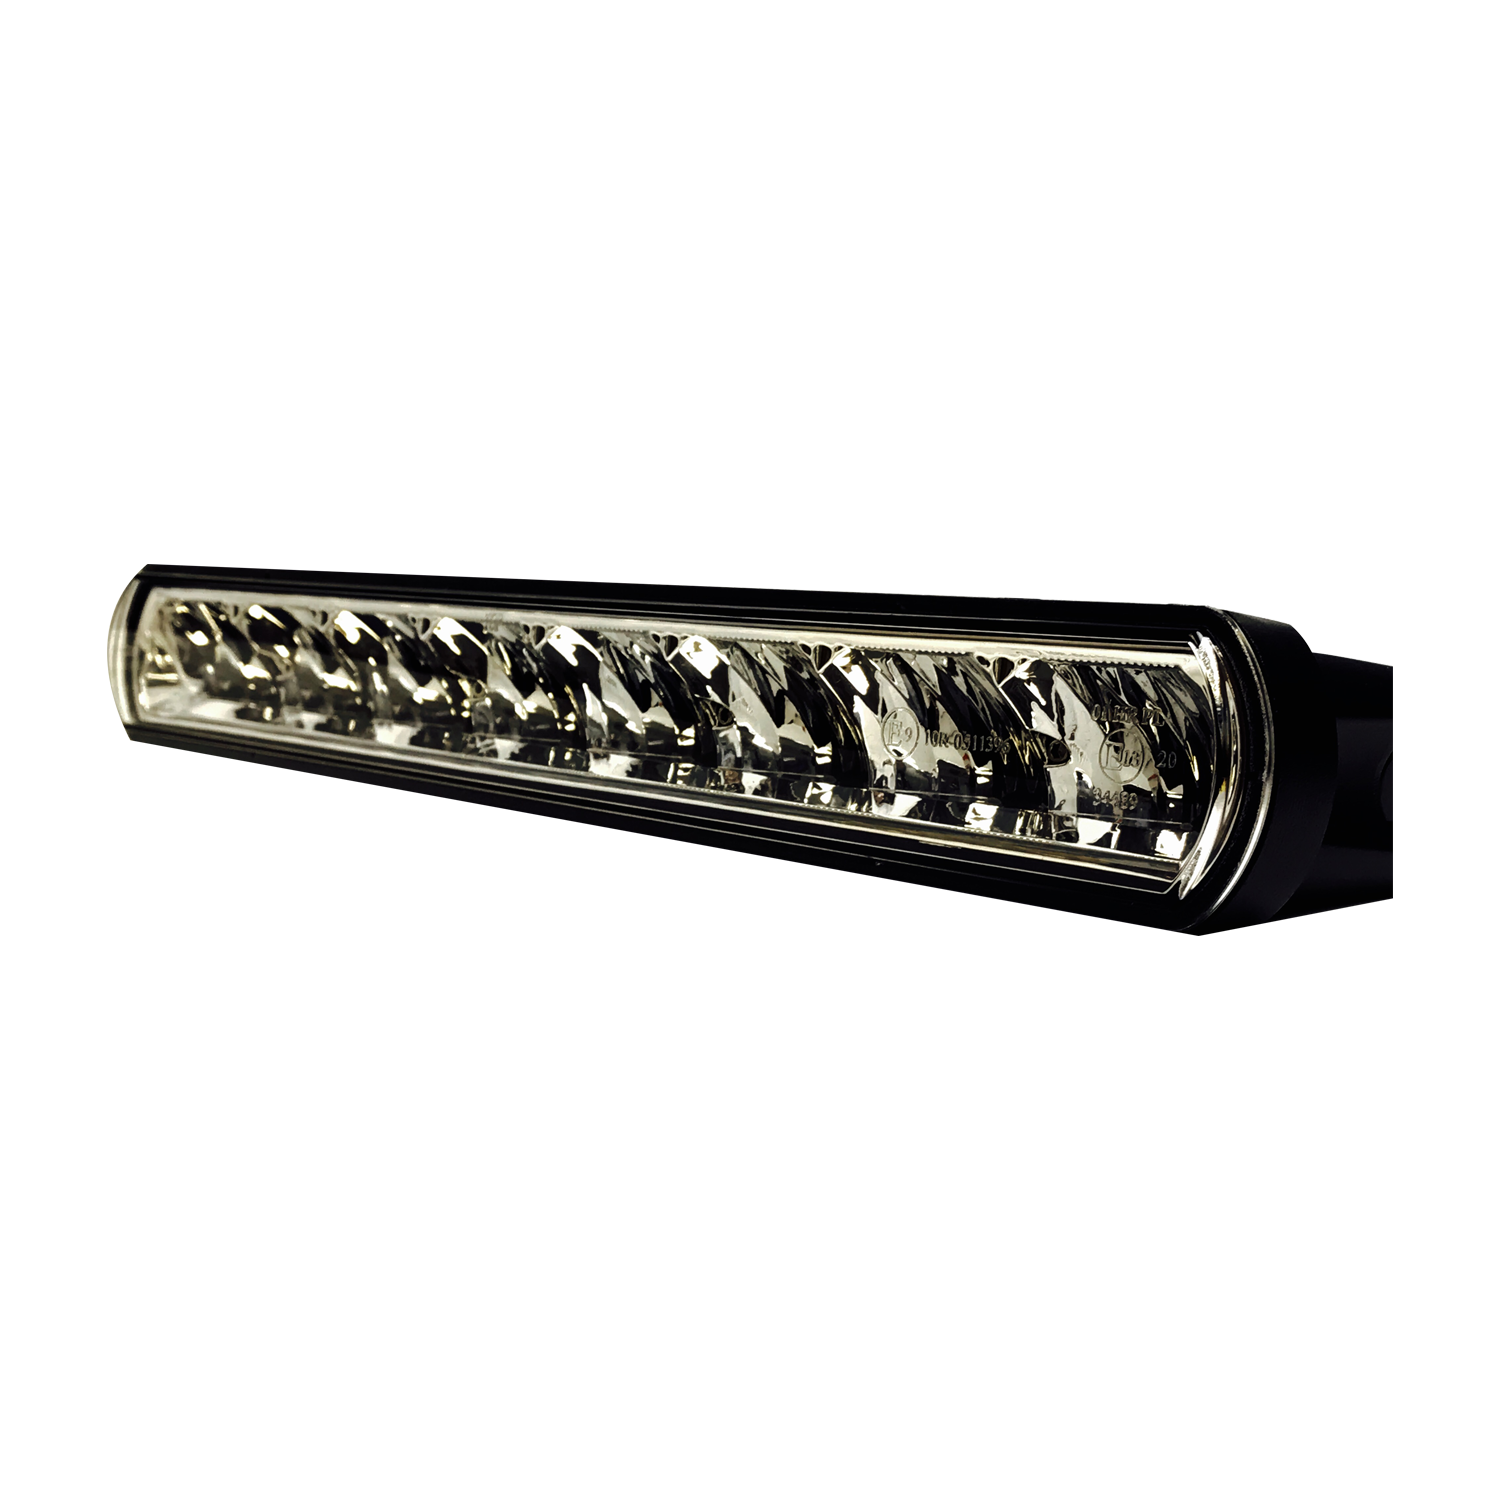 ECCO 5000 Lumens LED Light Bar 350mm / 3 Year Warranty - spo-cs-disabled - spo-default - spo-disabled - spo-notify-me-d